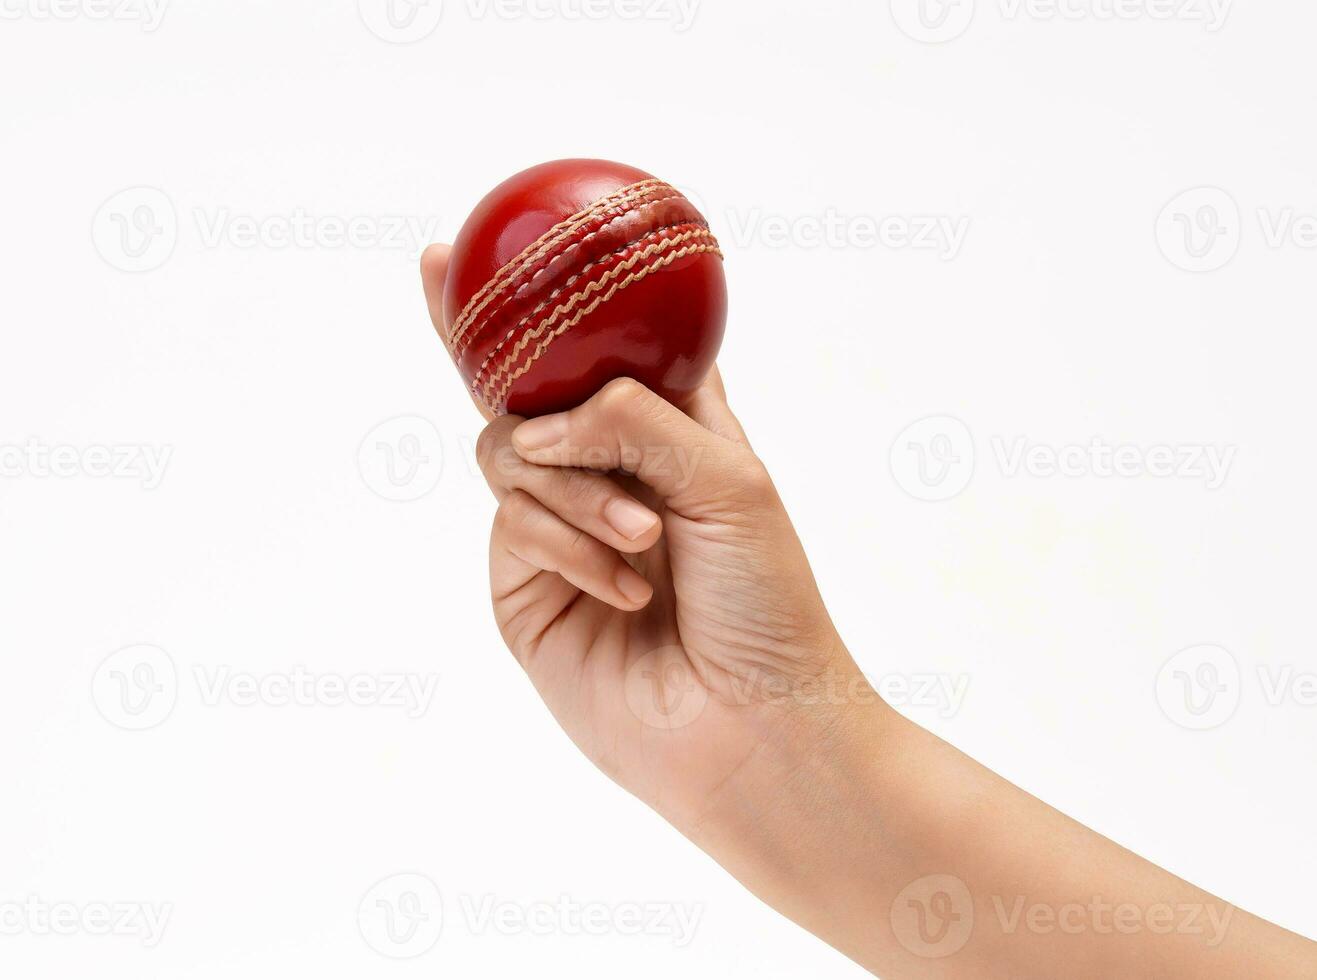 hembra jugador de bolos apretón a el rojo prueba Grillo pelota de cerca foto de hembra jugador de cricket mano acerca de a cuenco